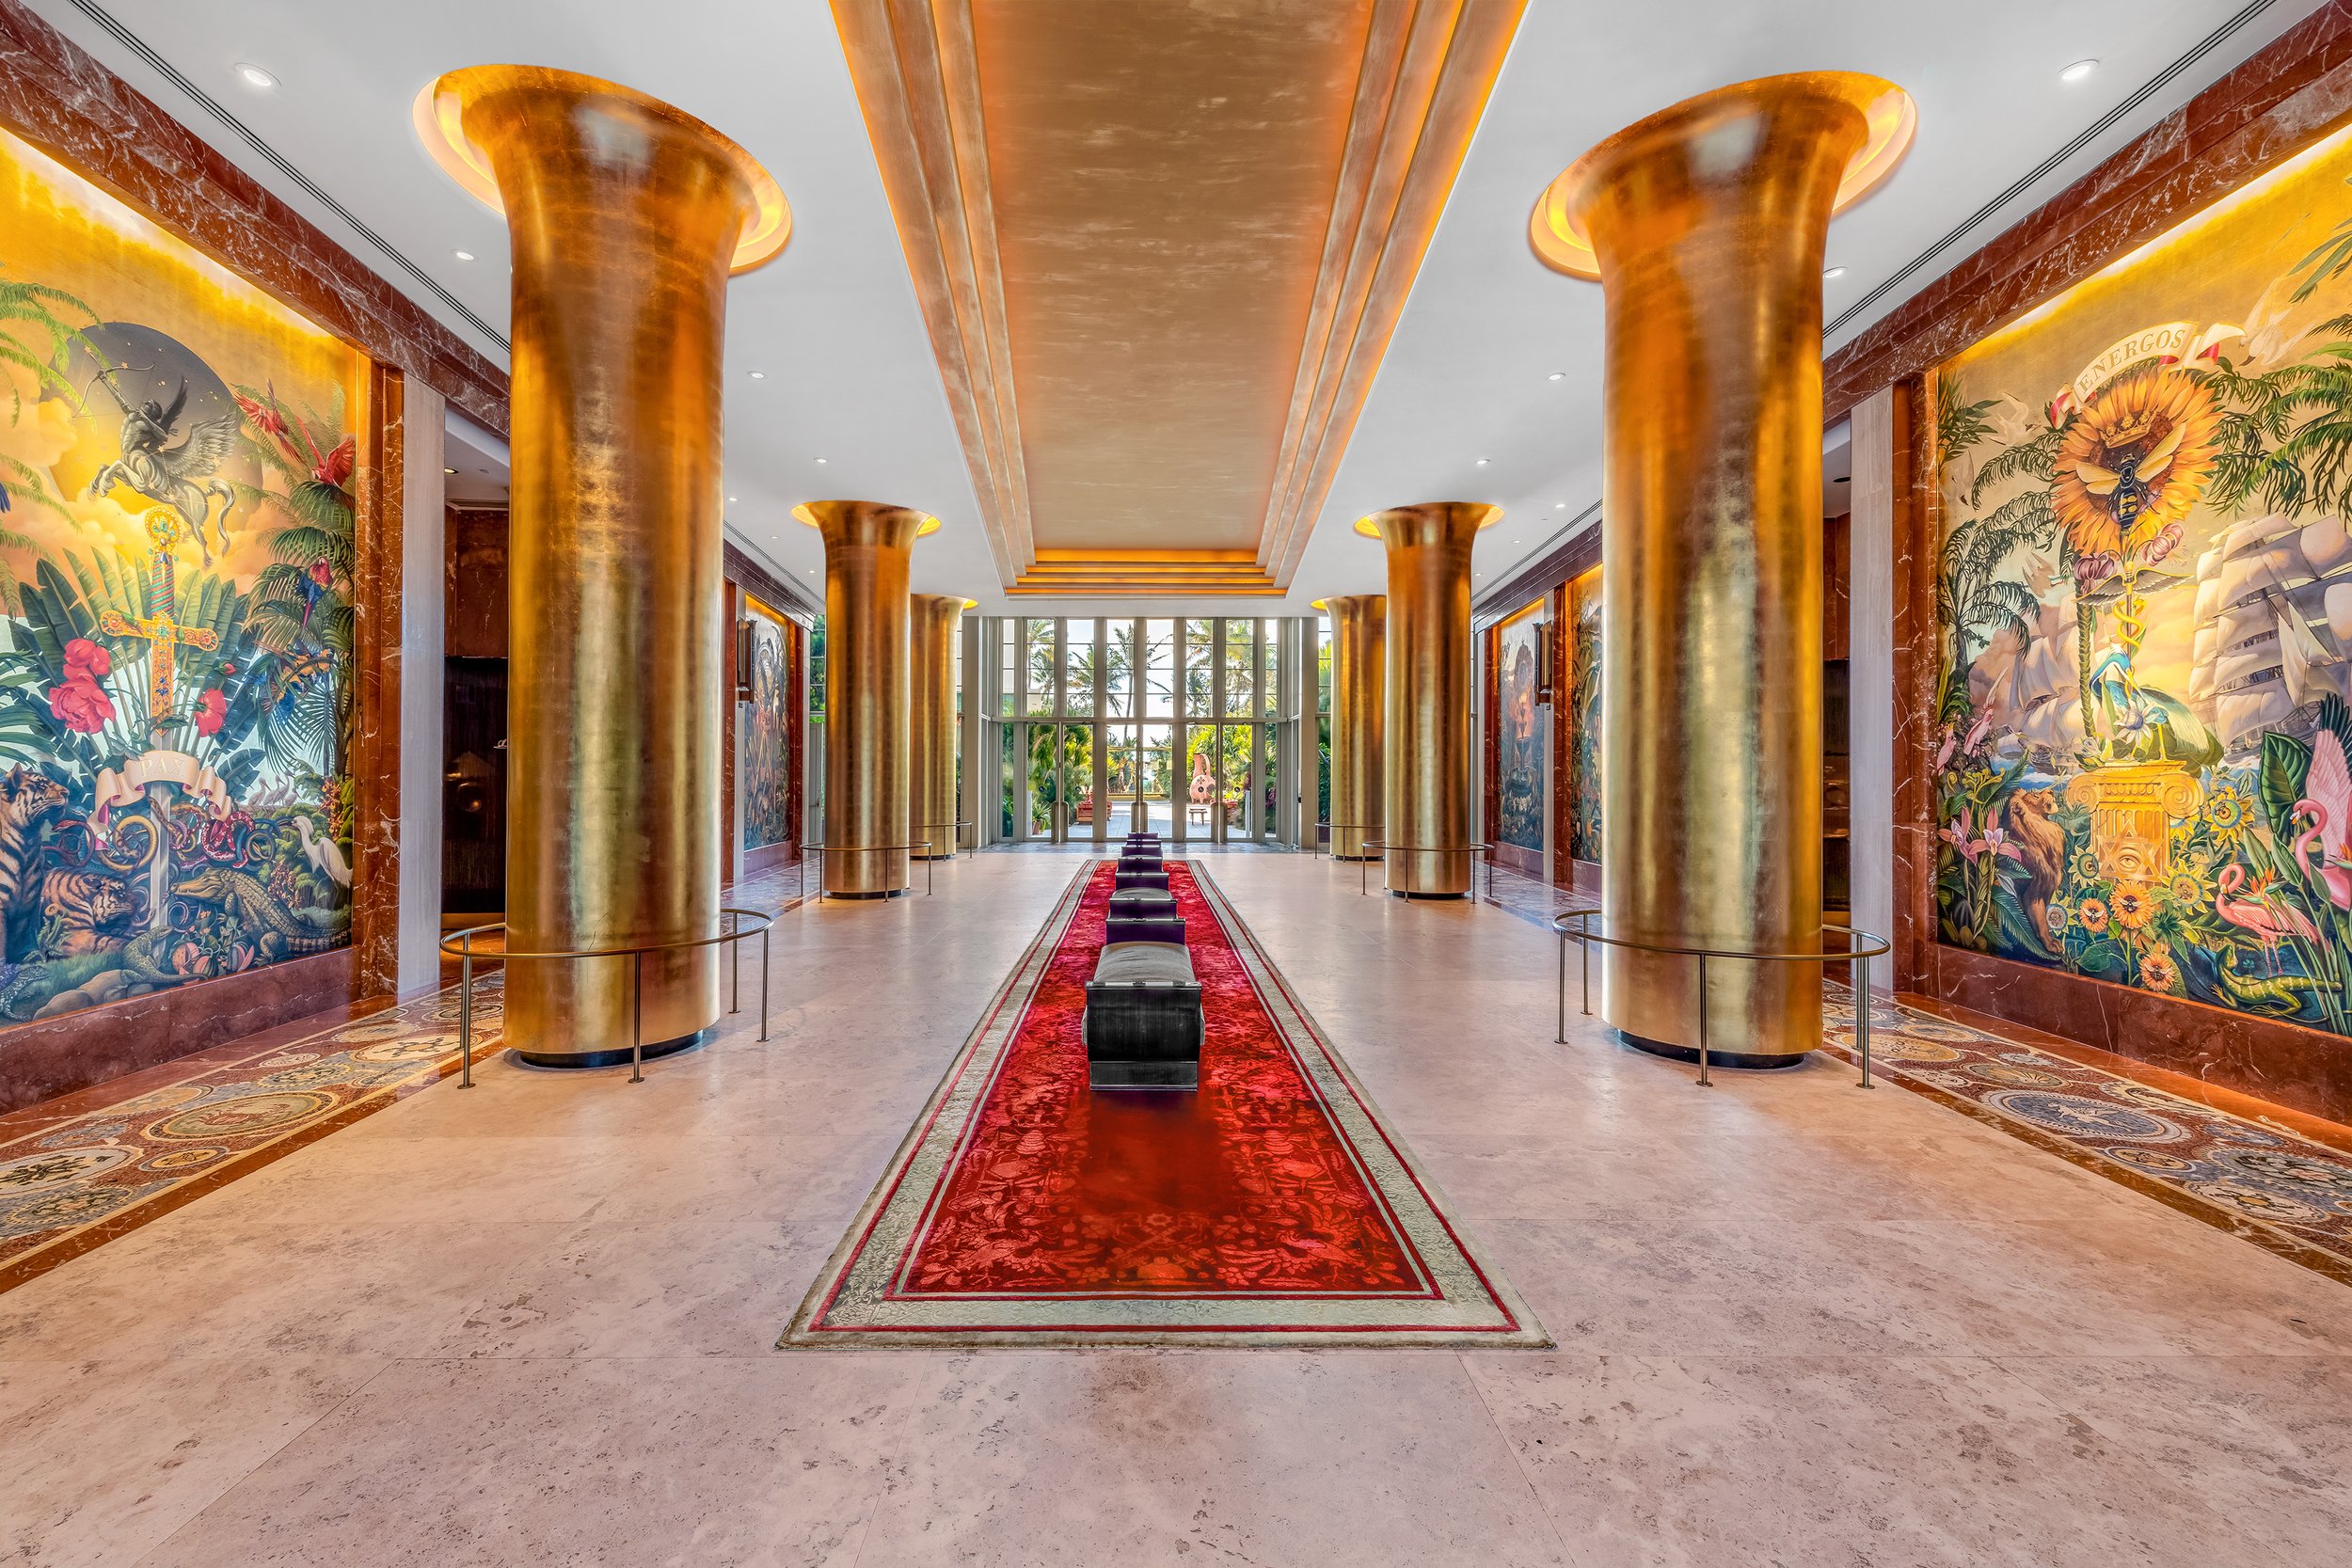 Faena Hotel Miami Beach - lobby interior - photo by Andrew Werner .jpg